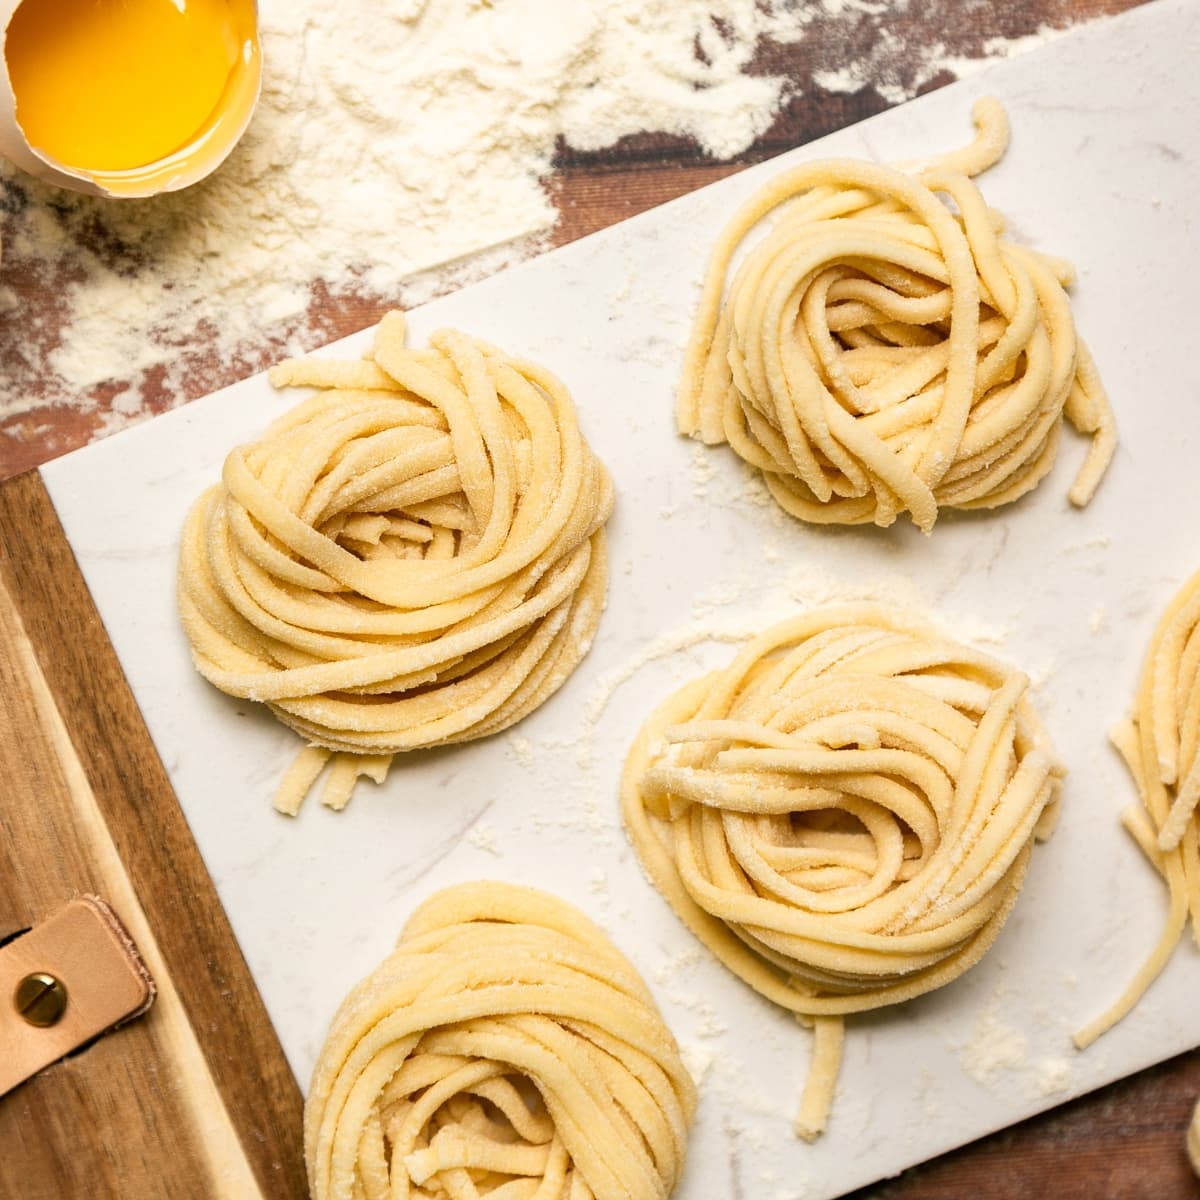 How to make homemade pasta